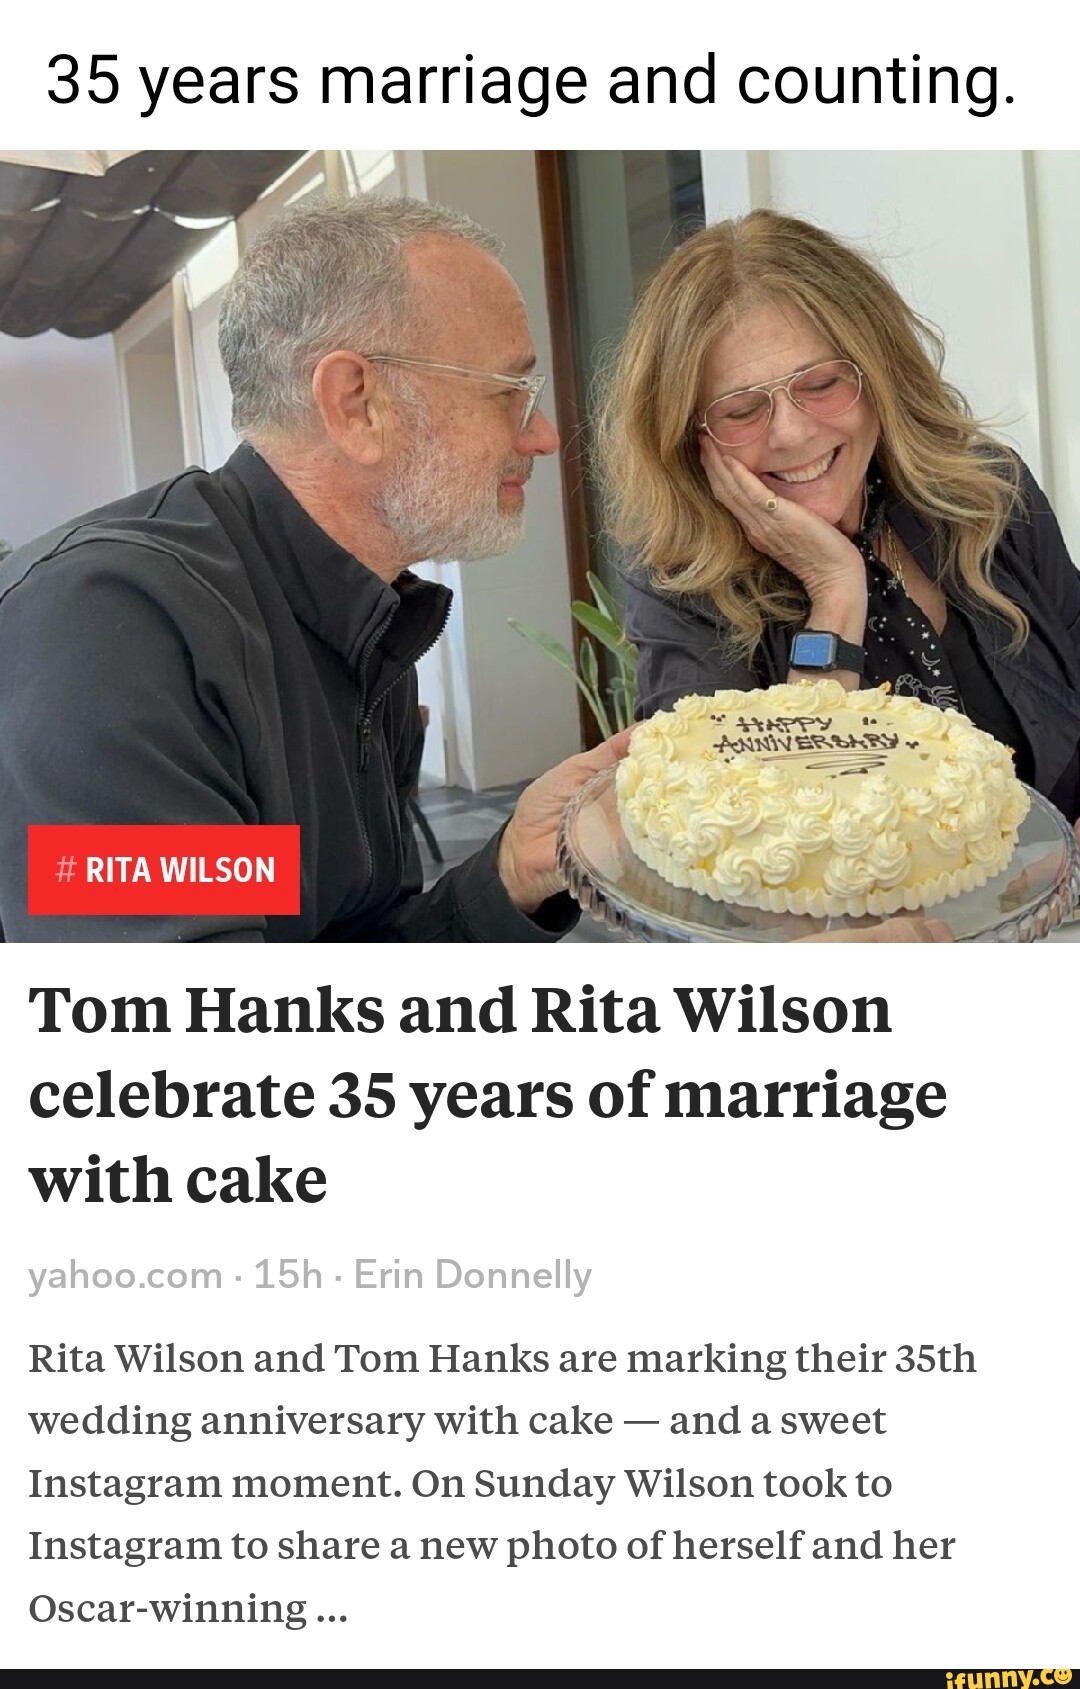 Tom Hanks and Rita Wilson celebrate 35th wedding anniversary